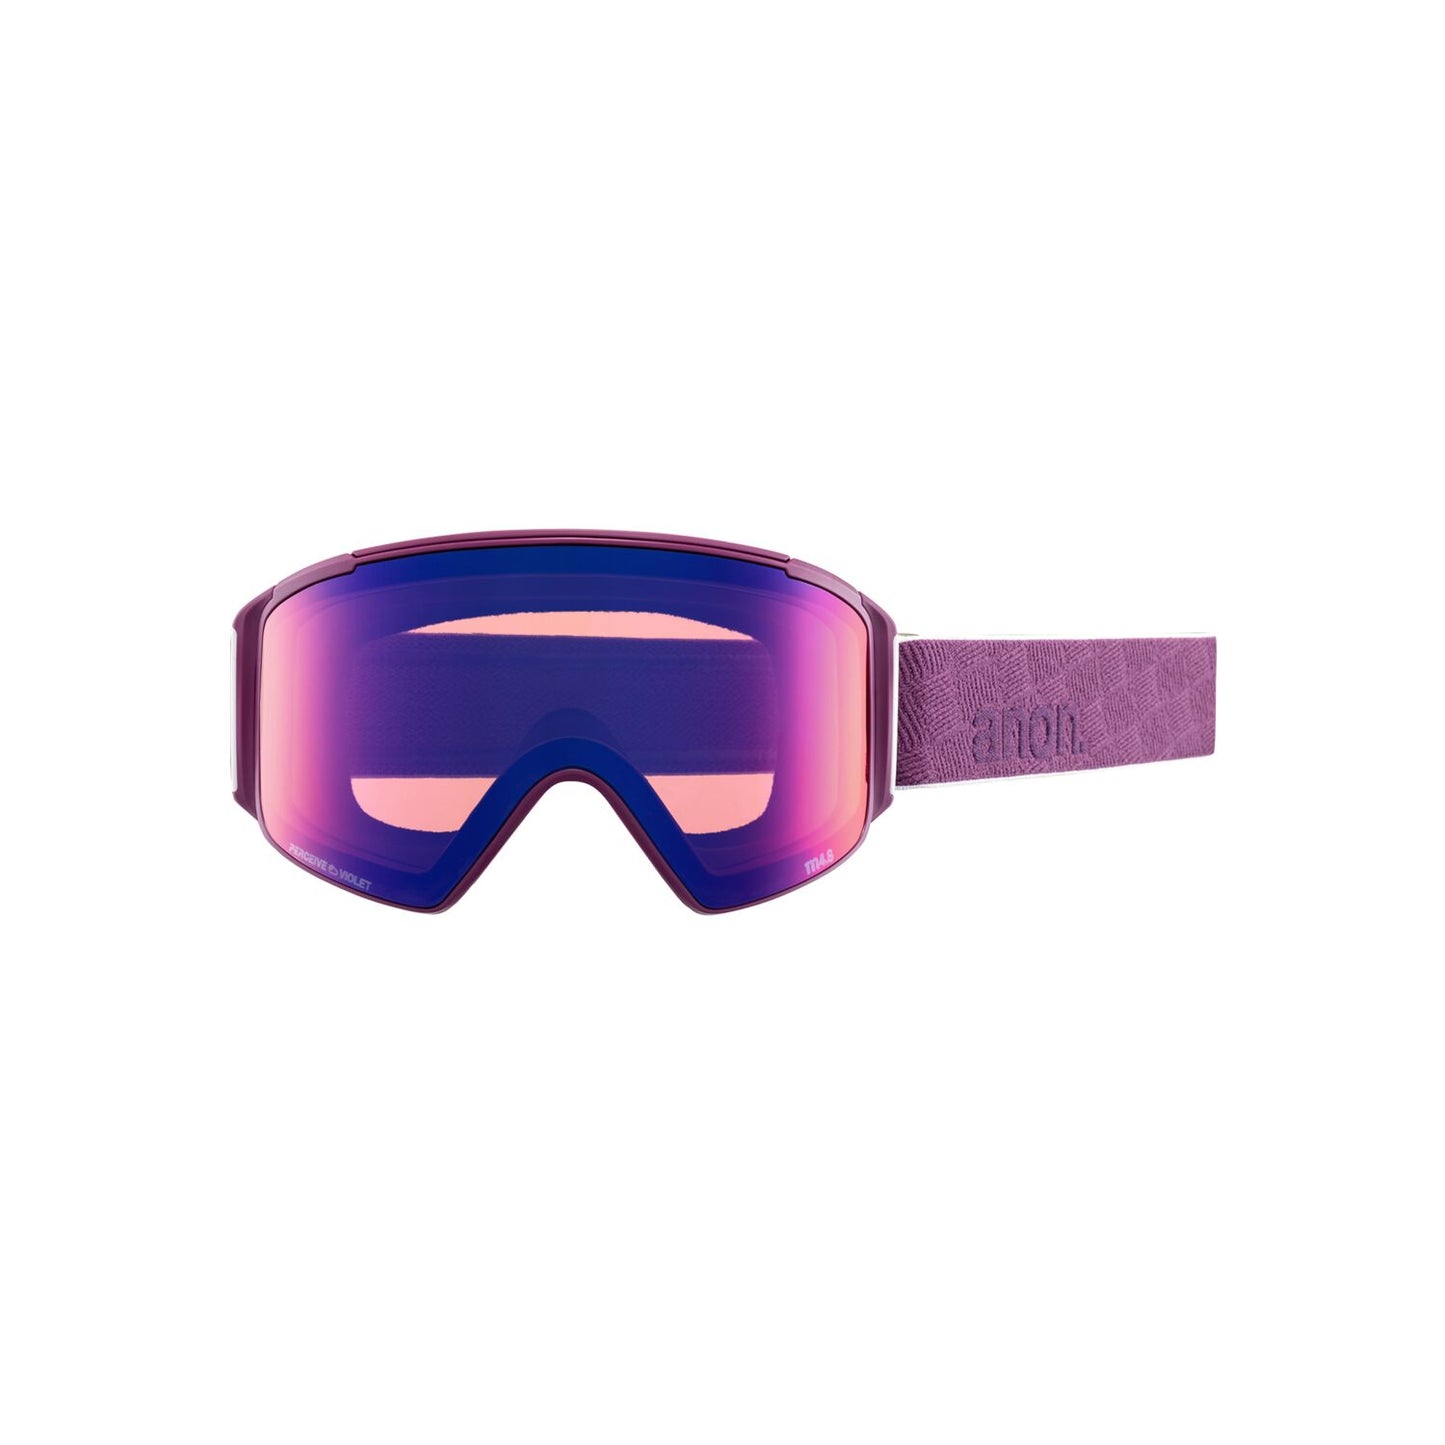 Anon M4S Cylindrical Goggles + Bonus Lens + MFI Face Mask Grape Perceive Sunny Onyx Snow Goggles